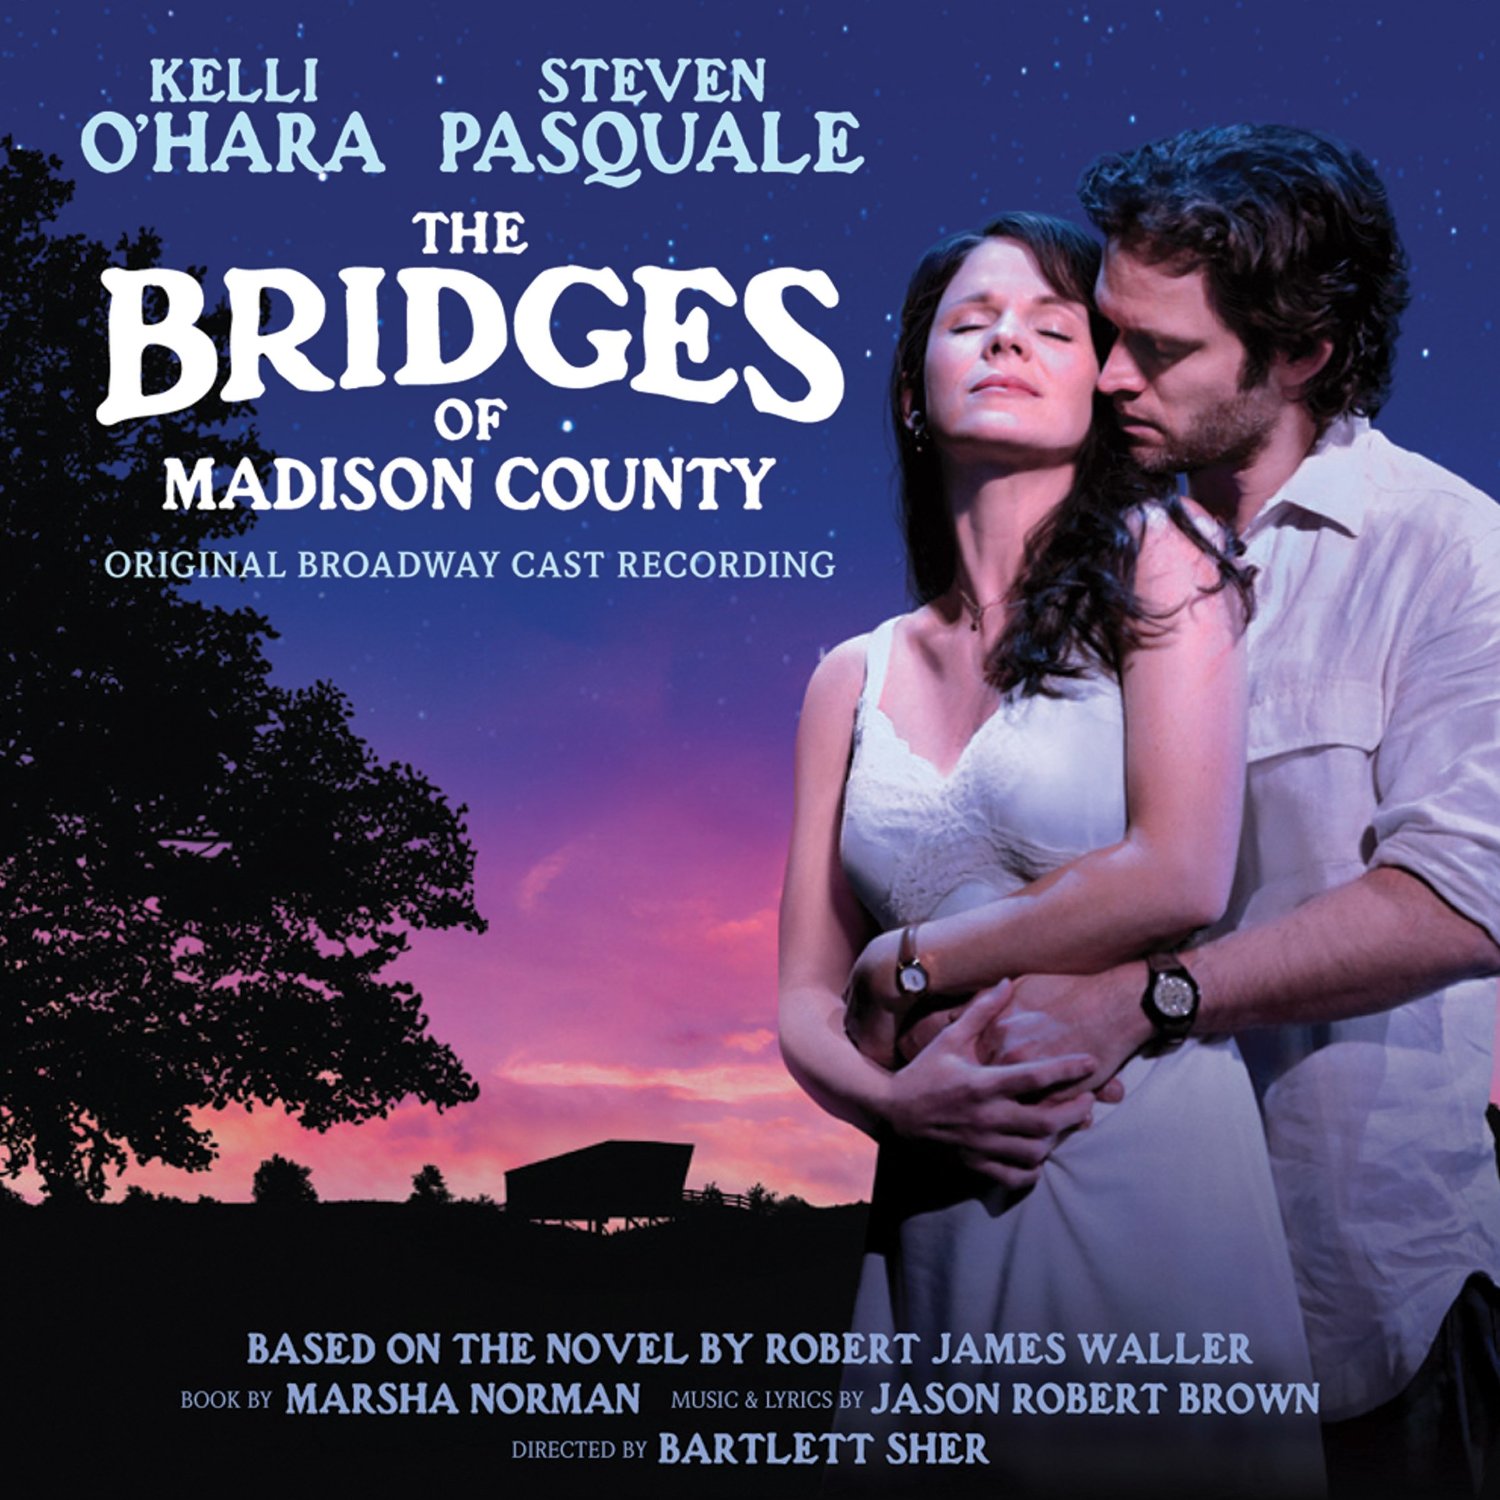 The Bridges of Madison County - Original Broadway Cast Recording Album